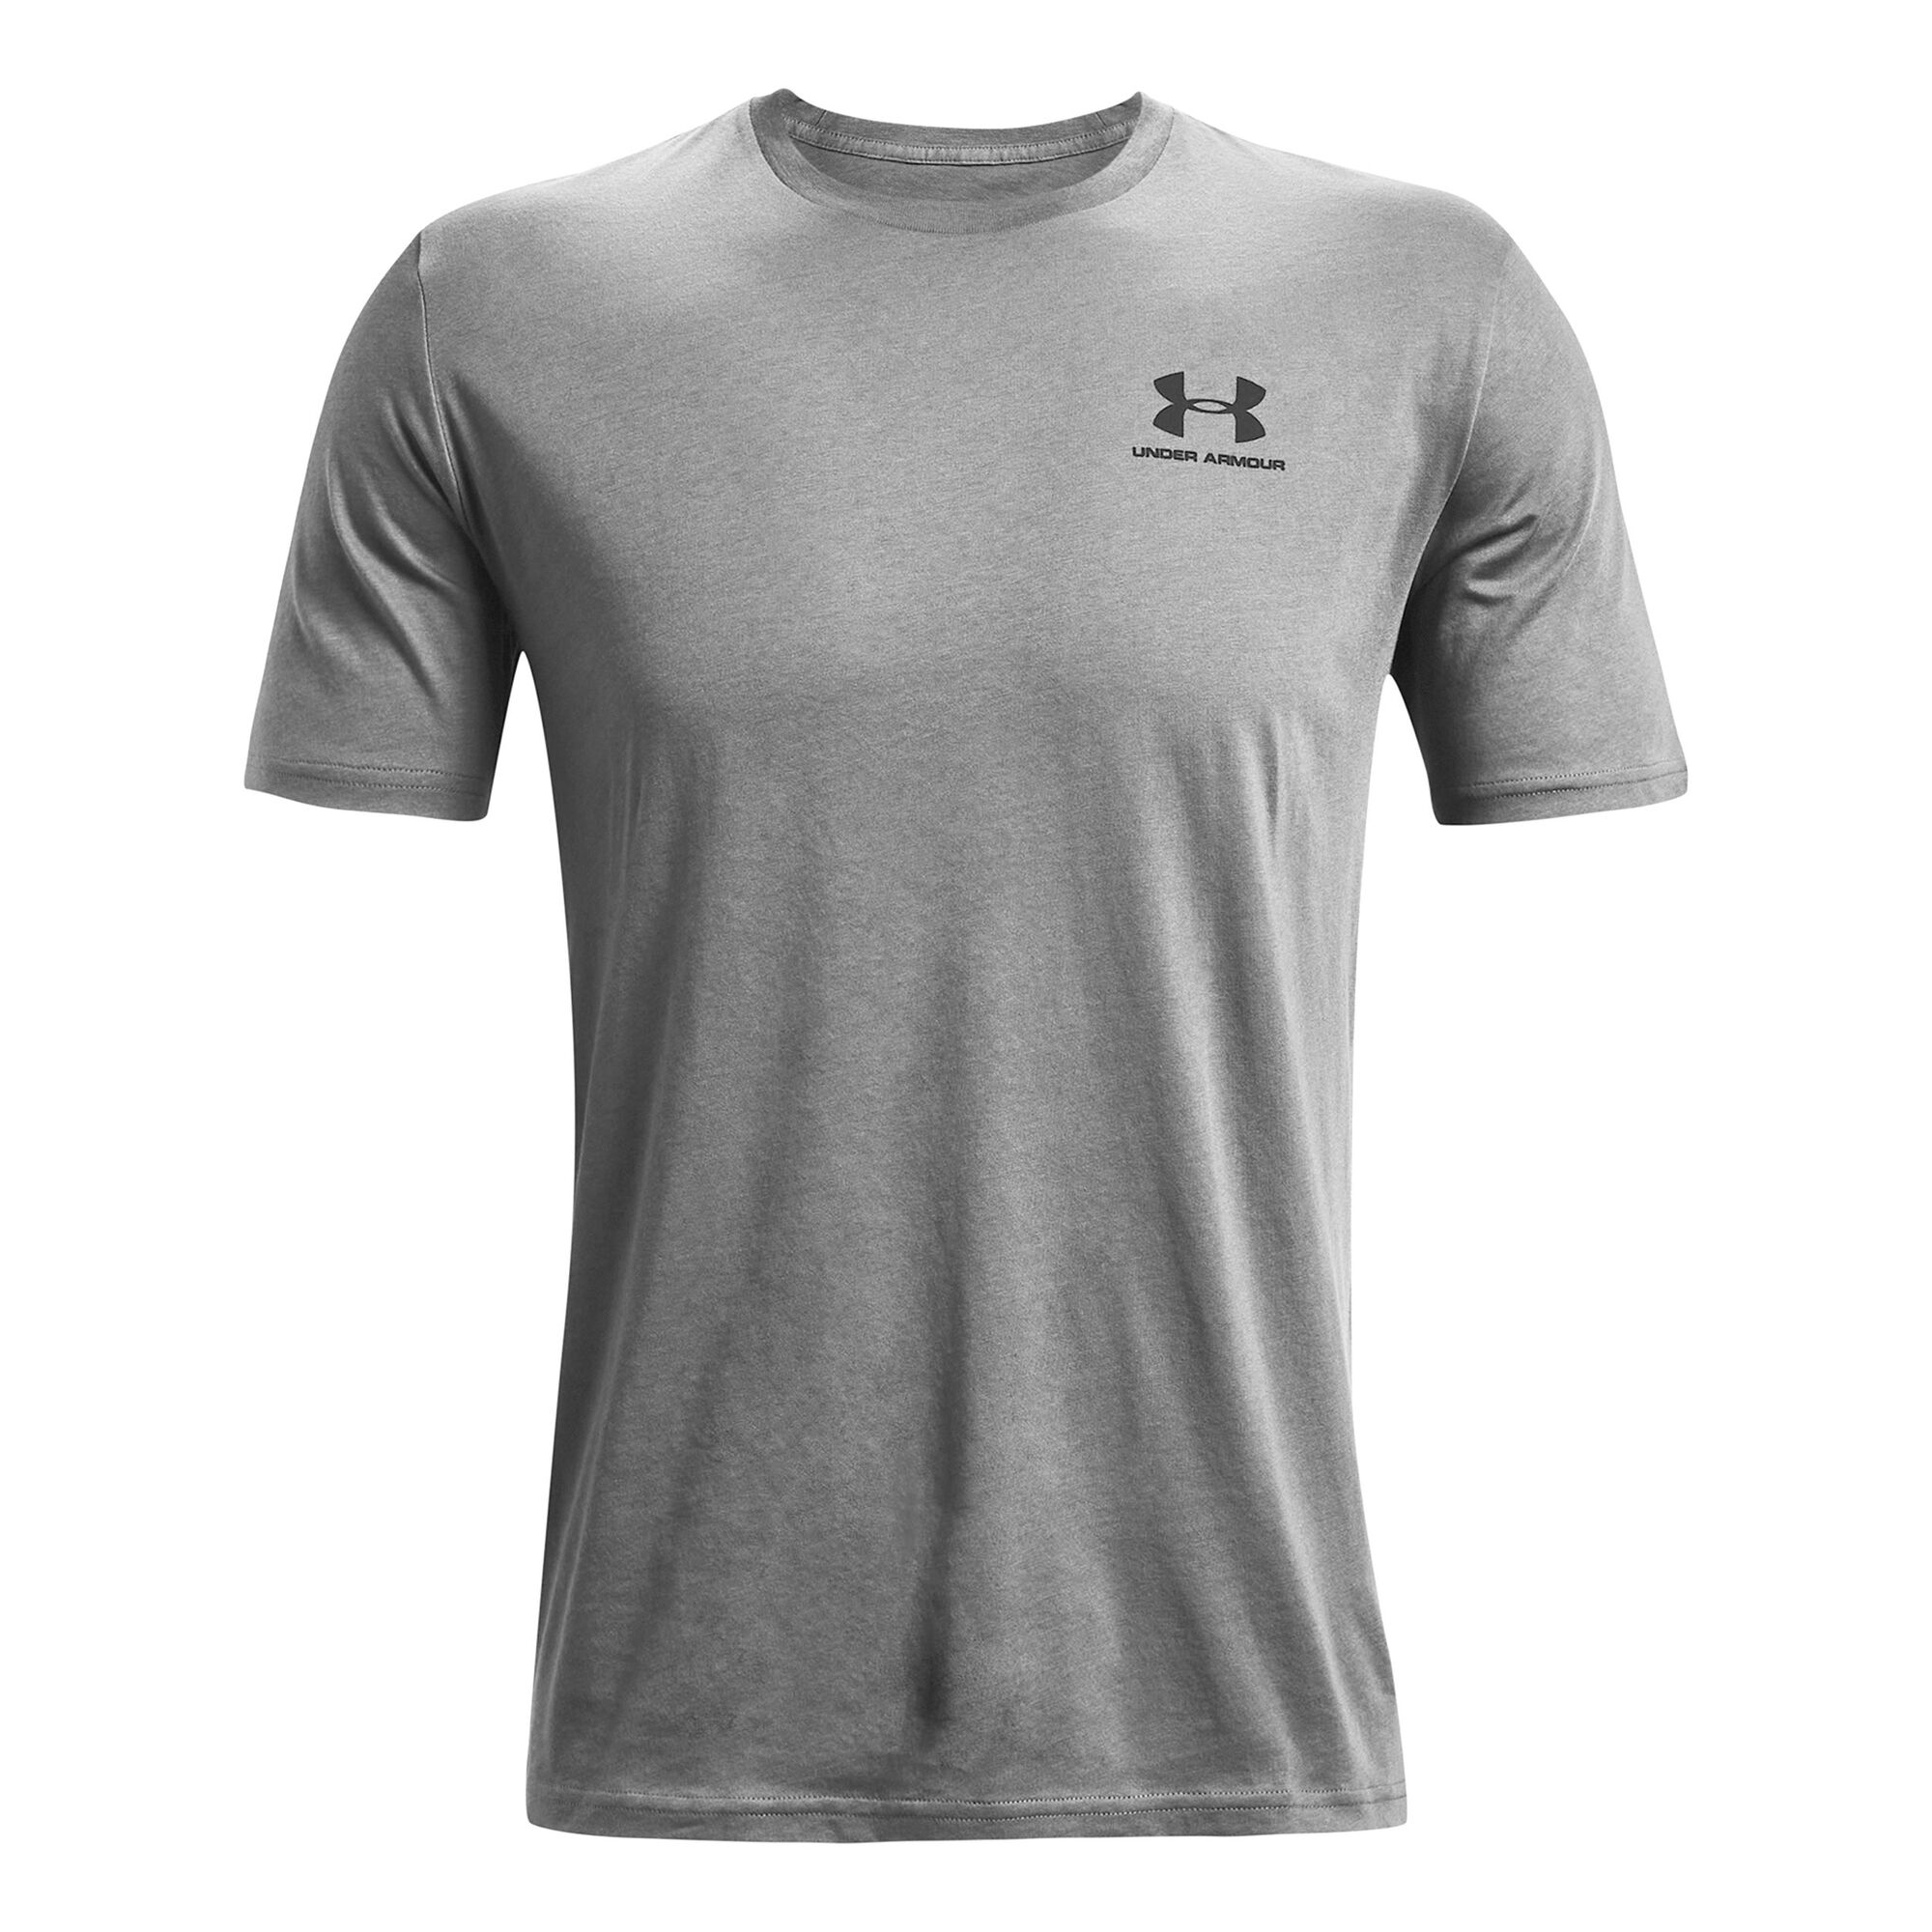 Sportstyle Left Chest T-Shirt Men - Grey, Black